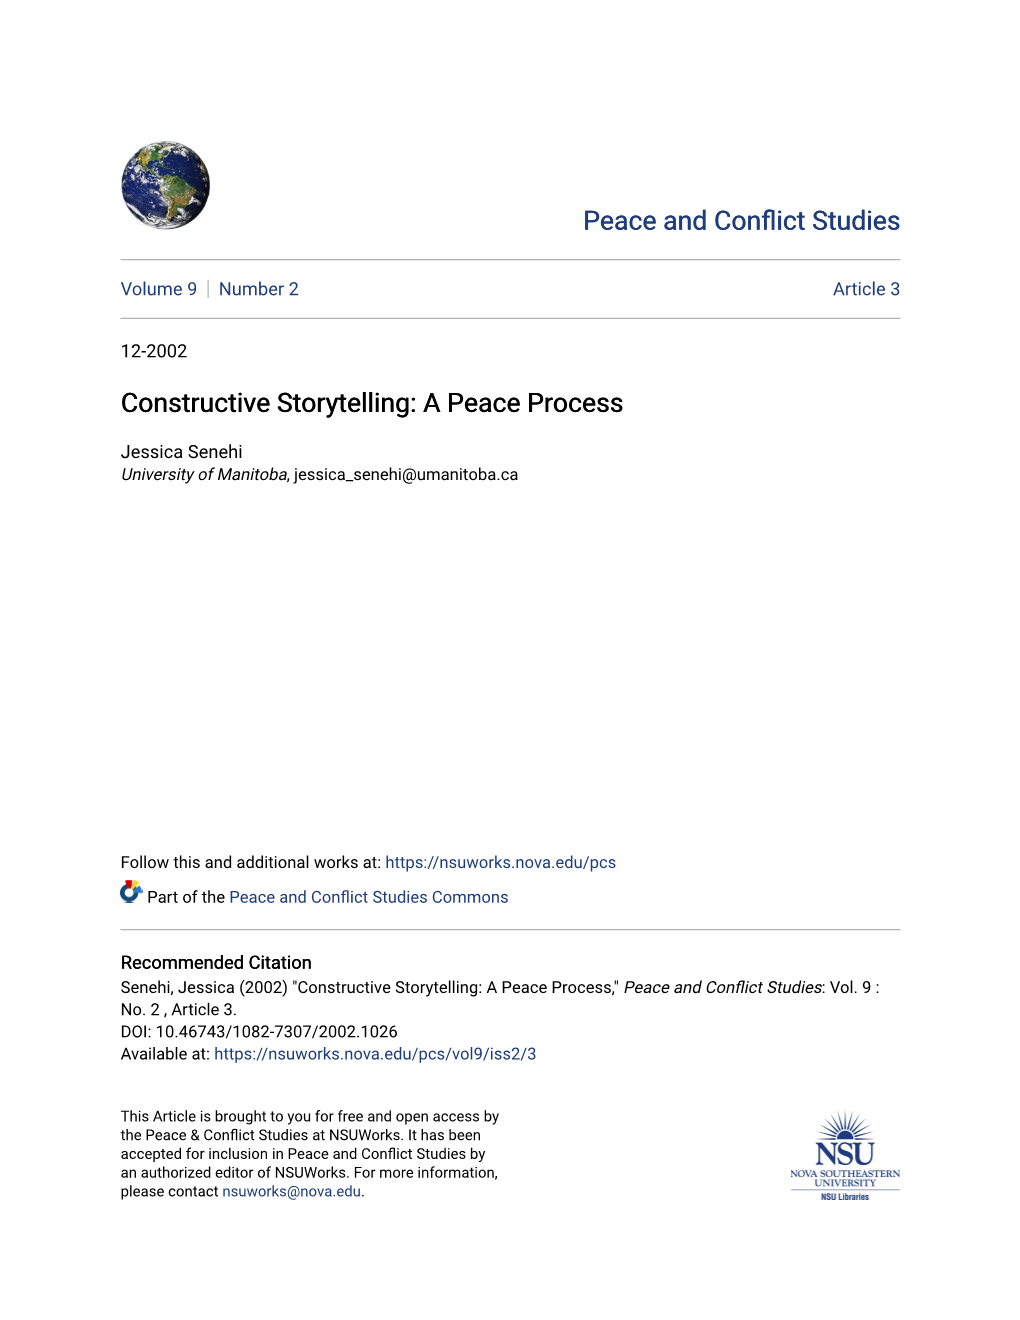 Constructive Storytelling: a Peace Process